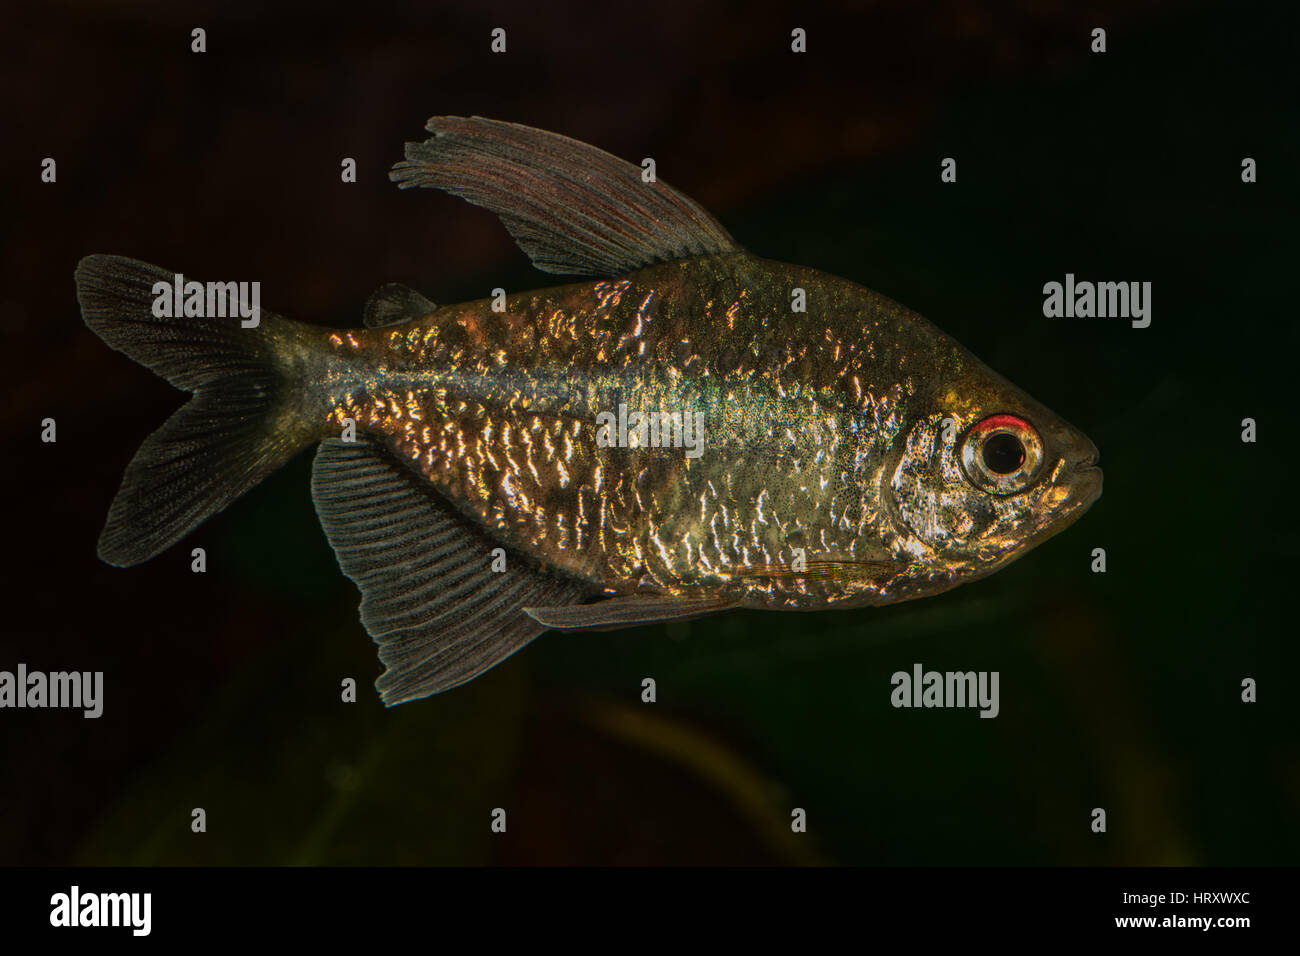 Portrait of freshwater tetra fish (Moenkhausia pittieri) in aquarium Stock Photo